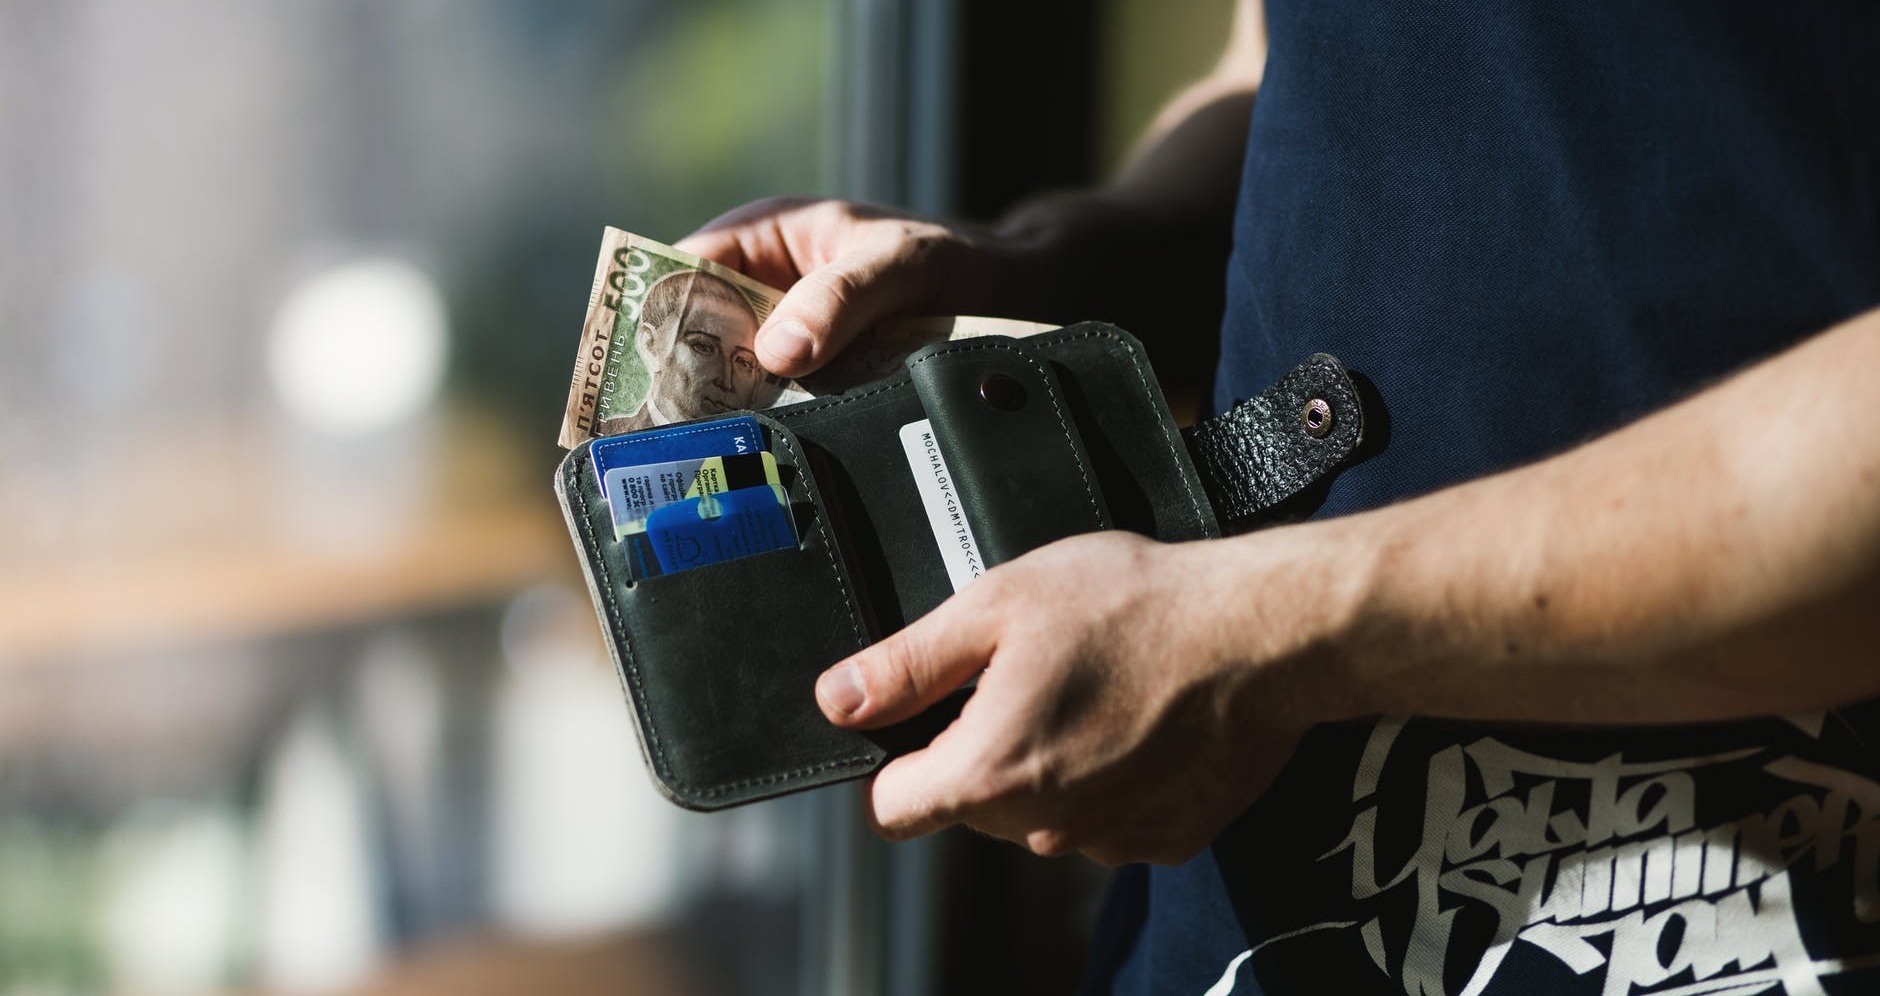 Hombre perdió billetera e ingeniosa forma en que extraño se contactó para devolvérsela es viral